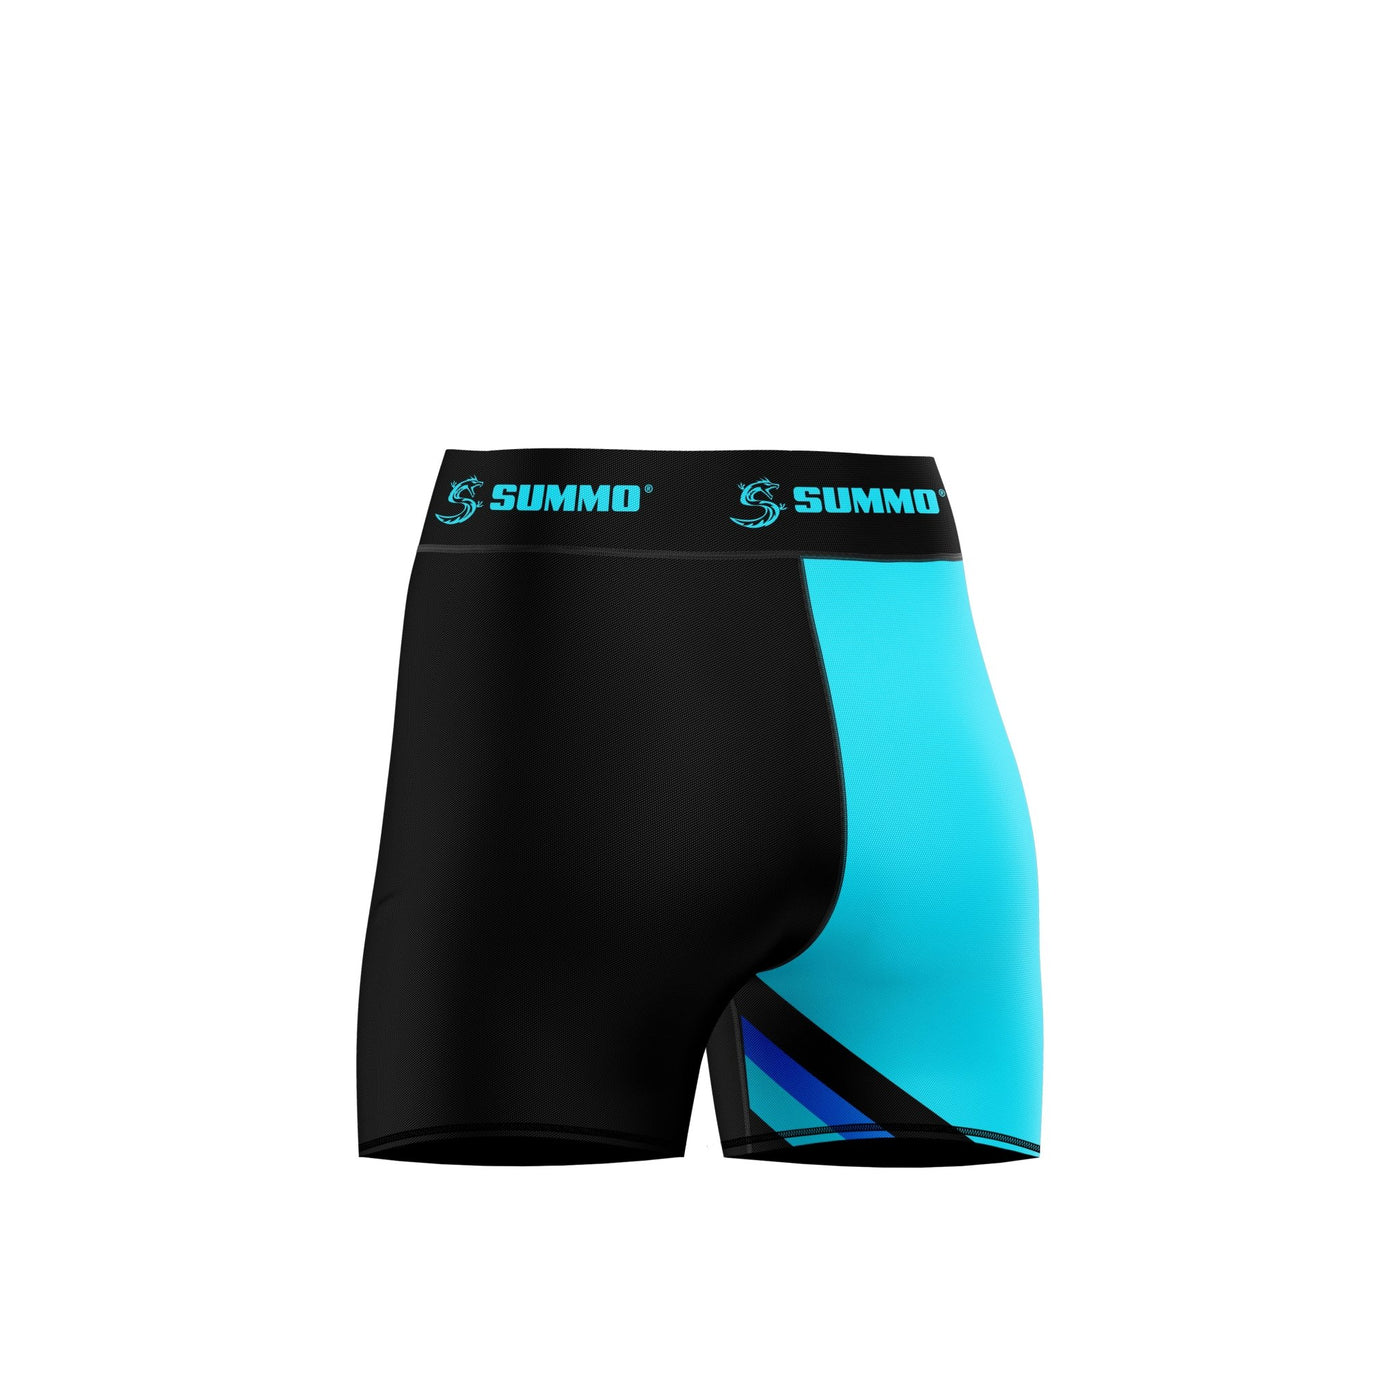 Summo Light Compression Shorts - Summo Sports